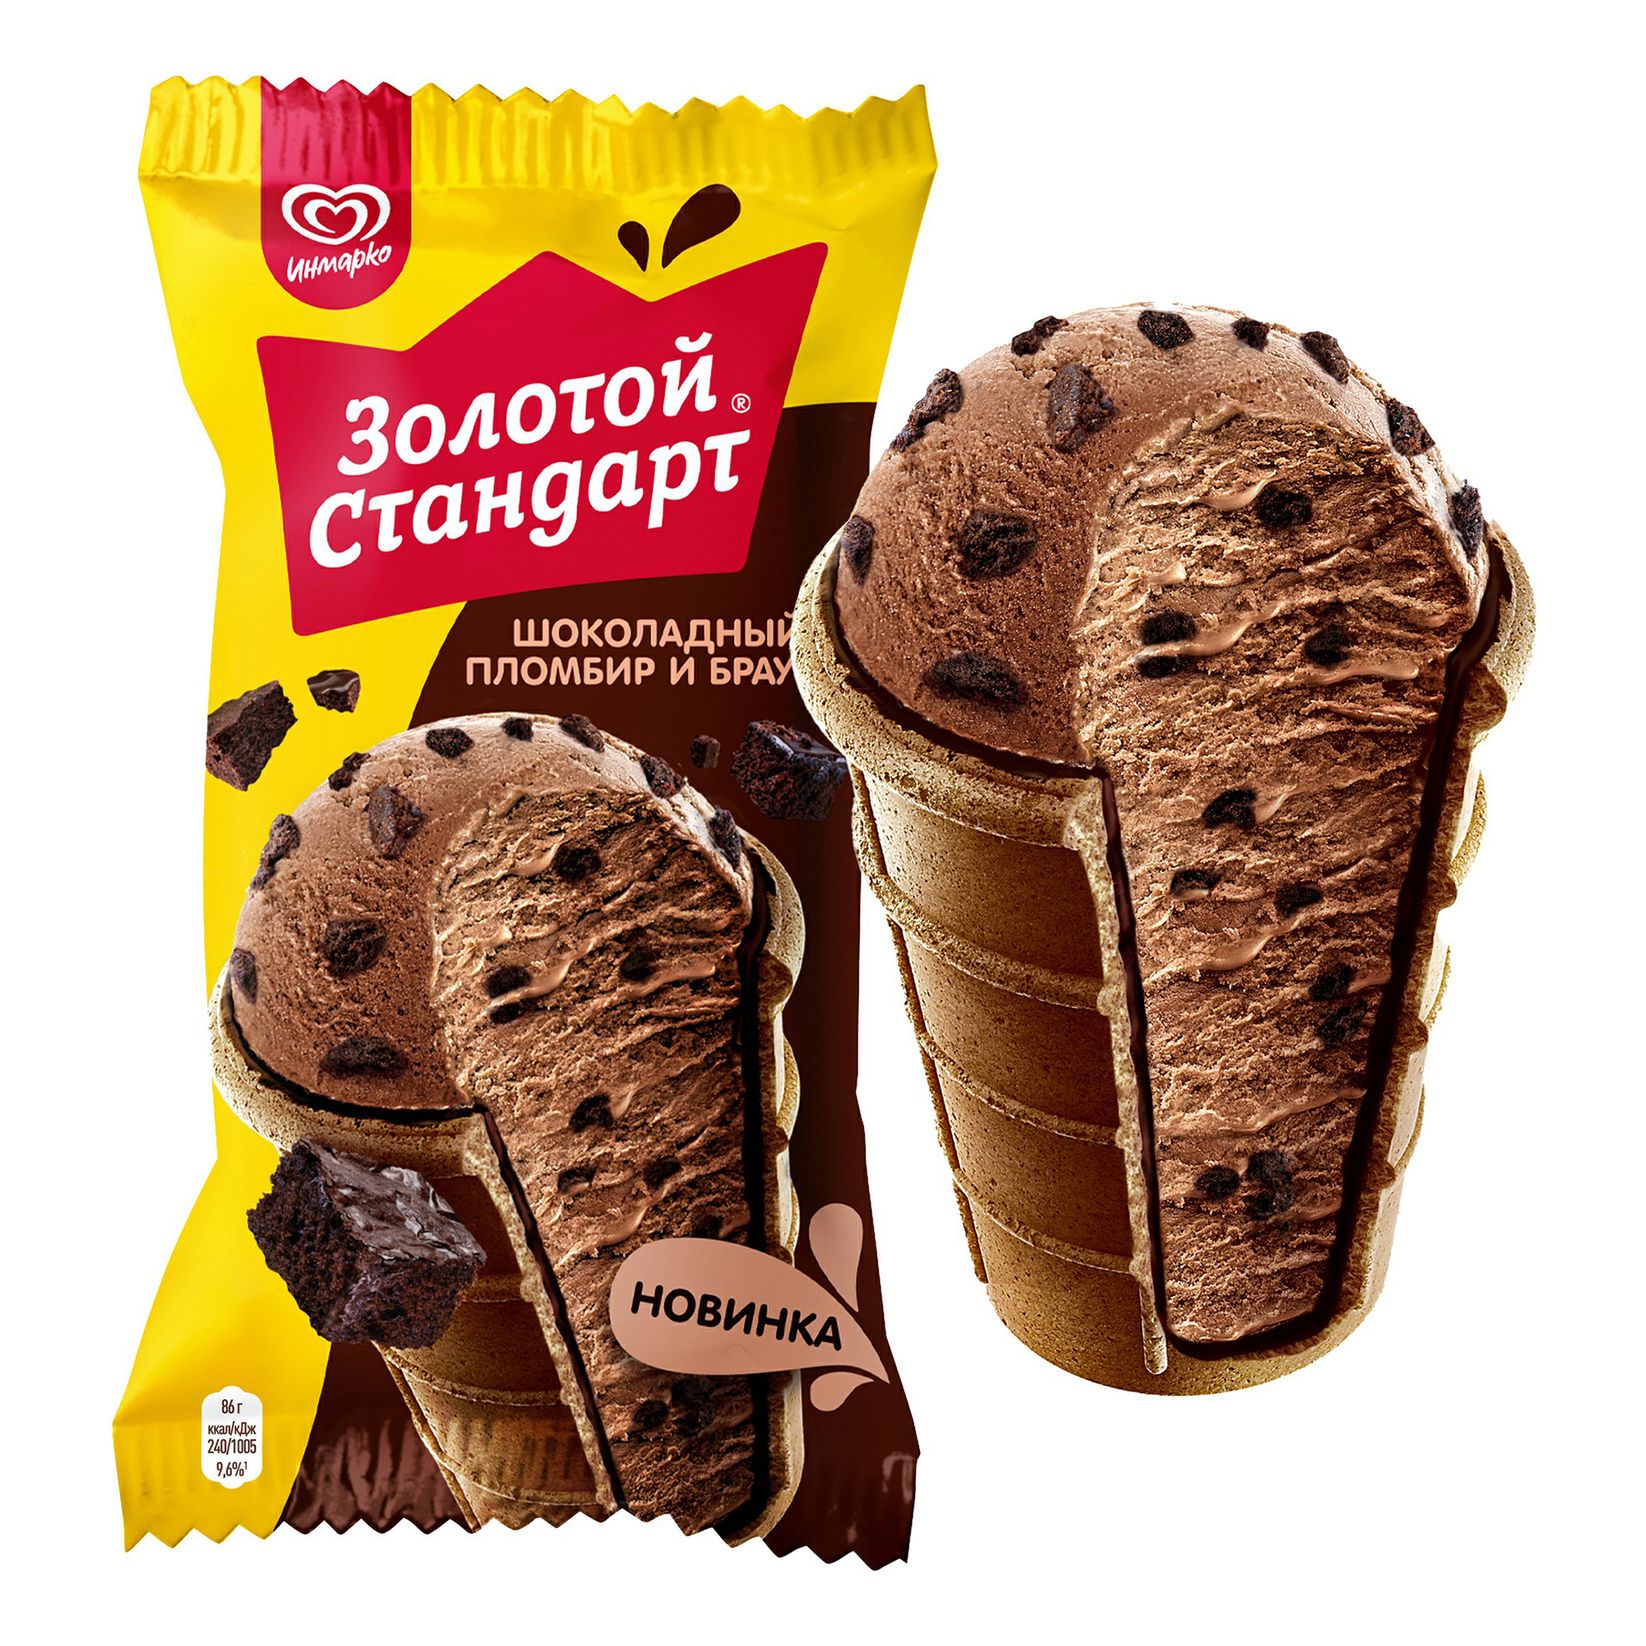 Мороженое Русский Стандарт